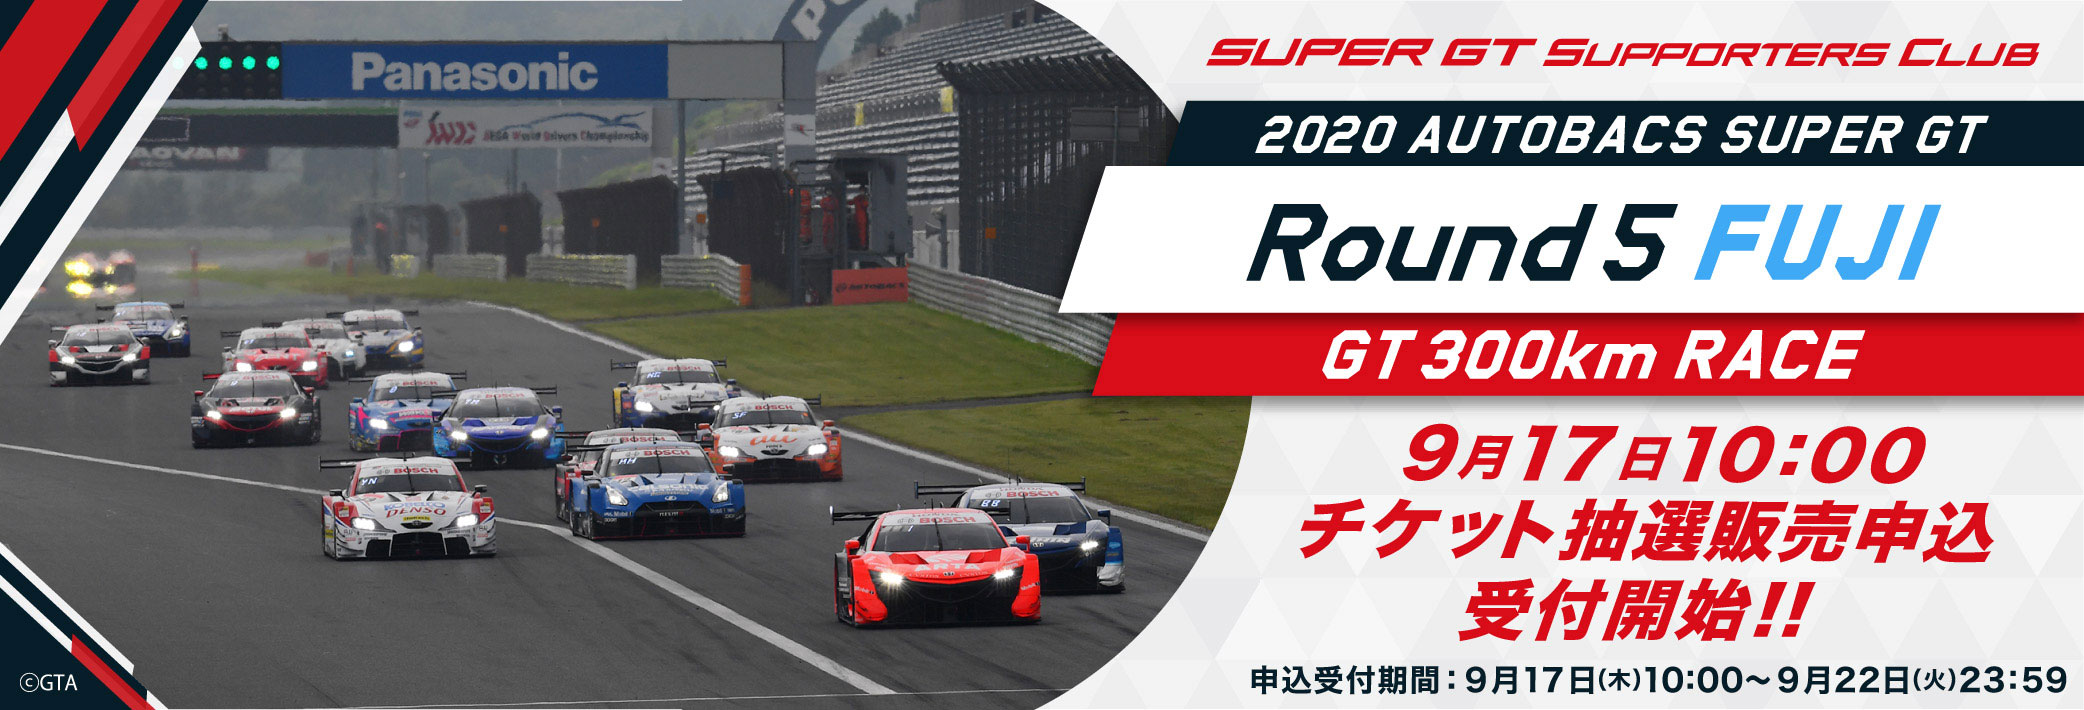 2020 AUTOBACS SUPER GT Rd.5 FUJI GT300KM RACE チケット販売のご案内